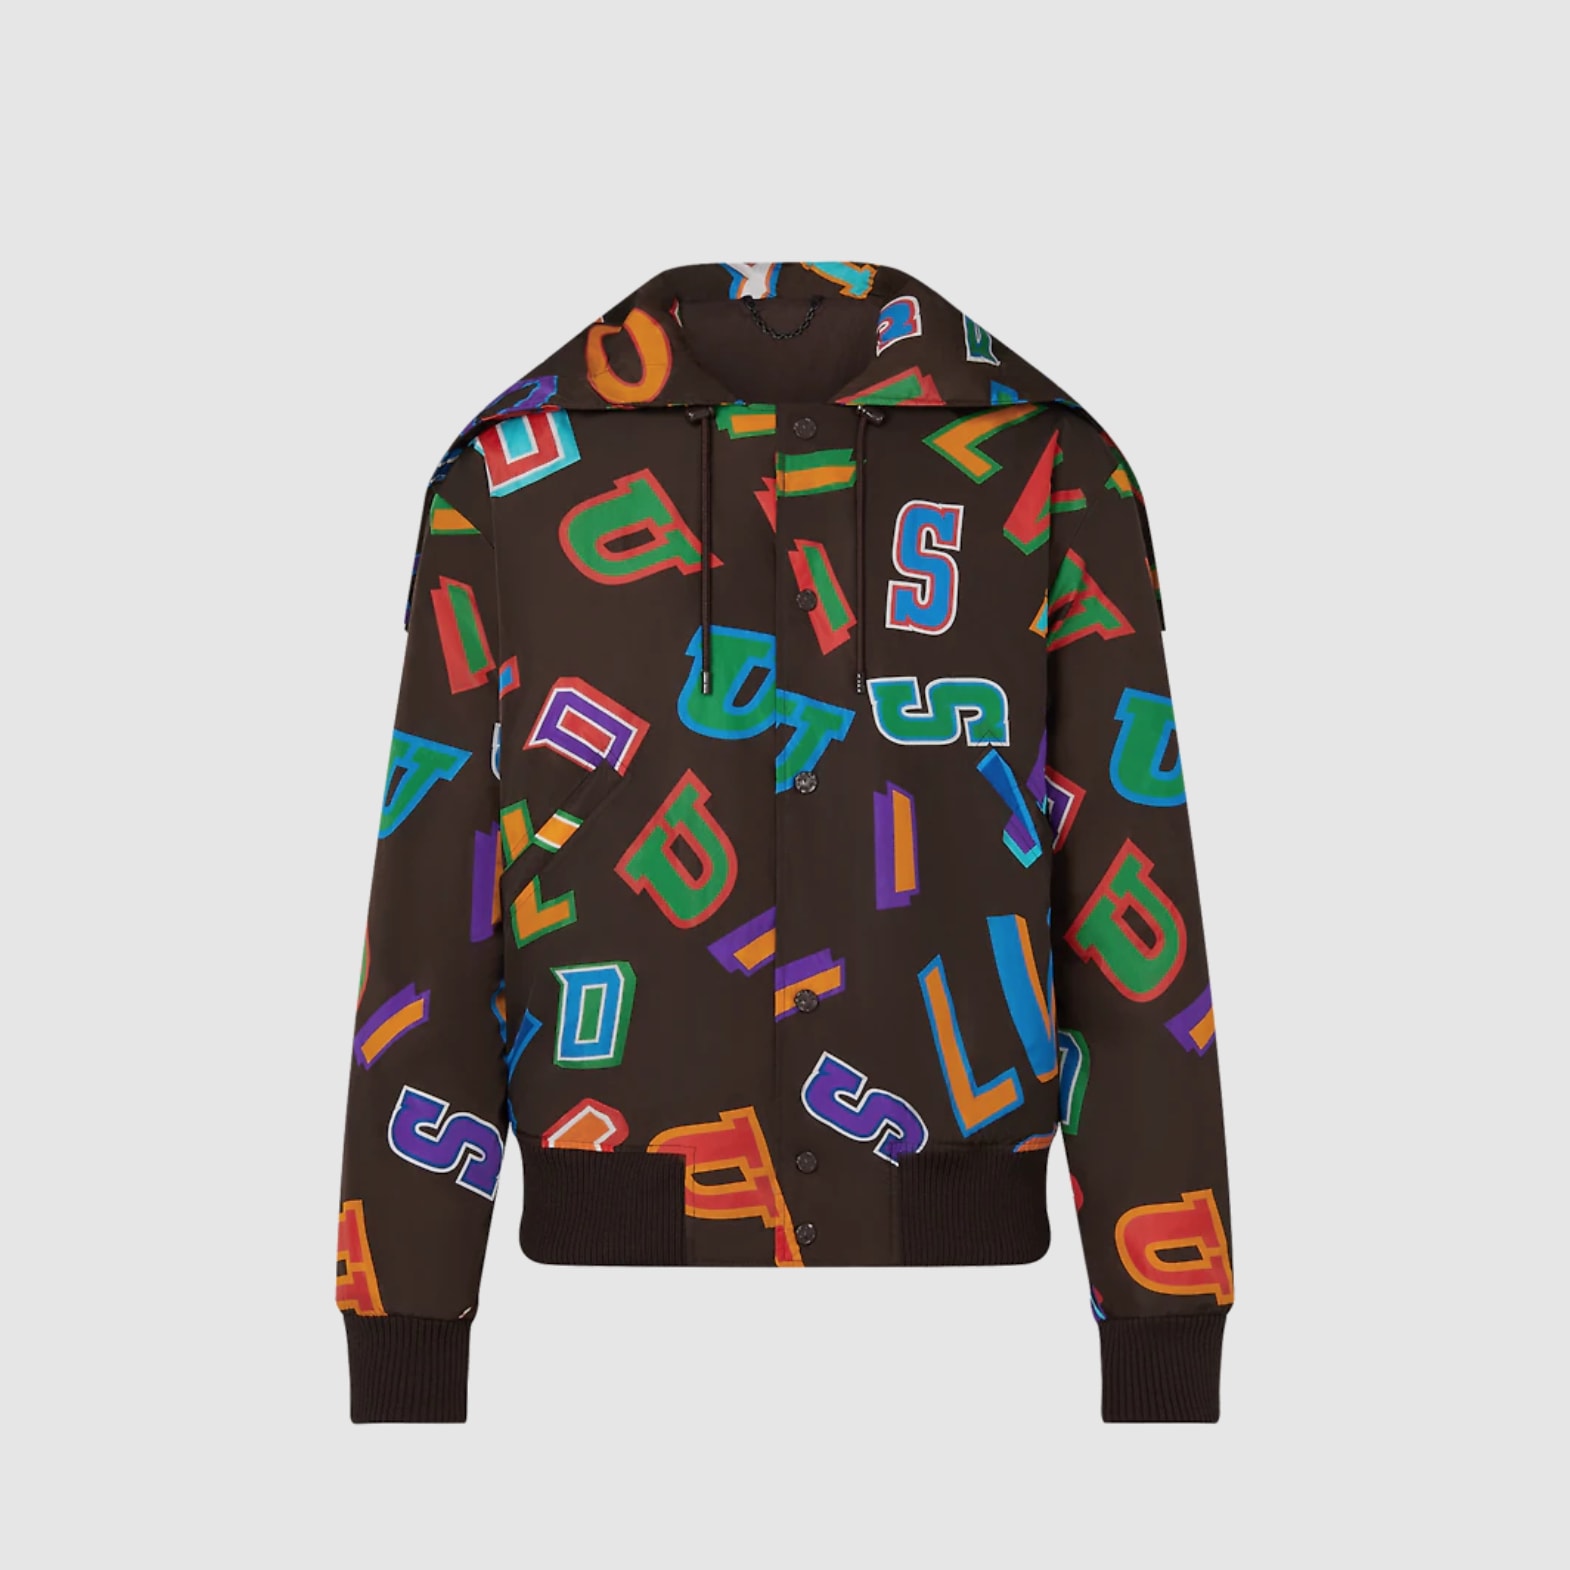 Juelz Santana Rocks Louis Vuitton x NBA Jacket Designed by Don C